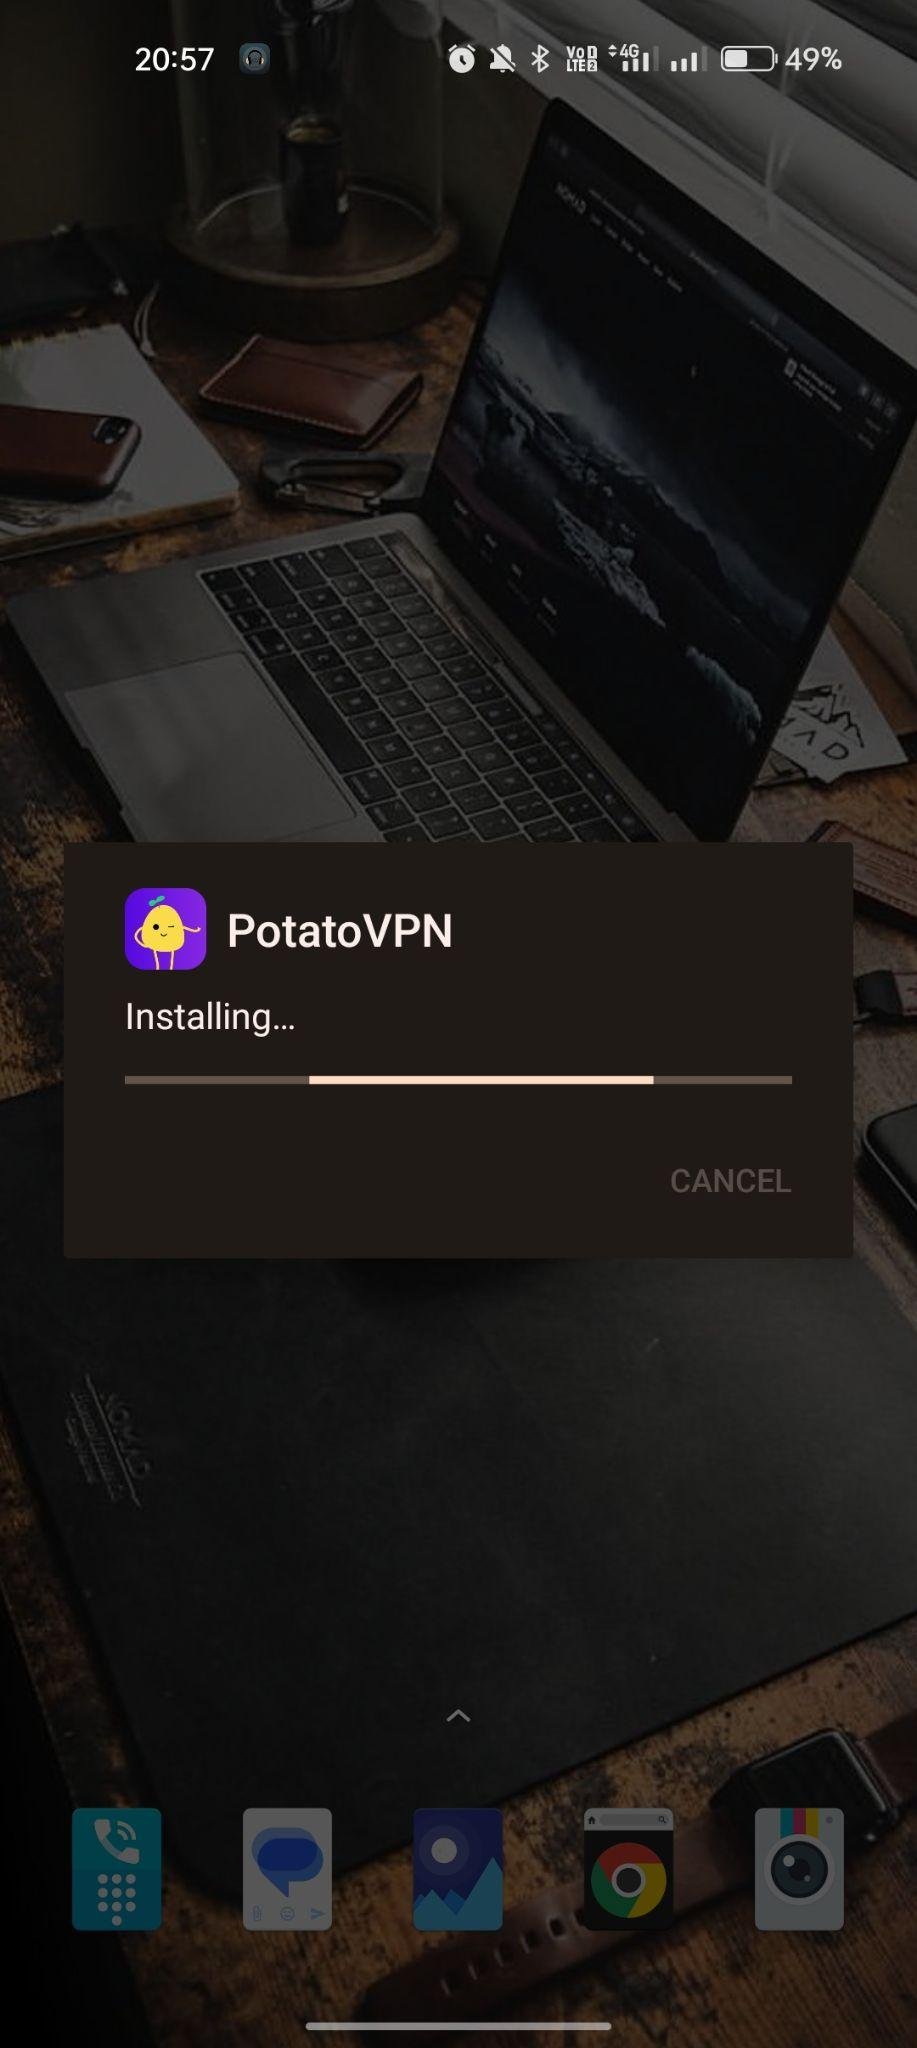 PotatoVPN apk installing